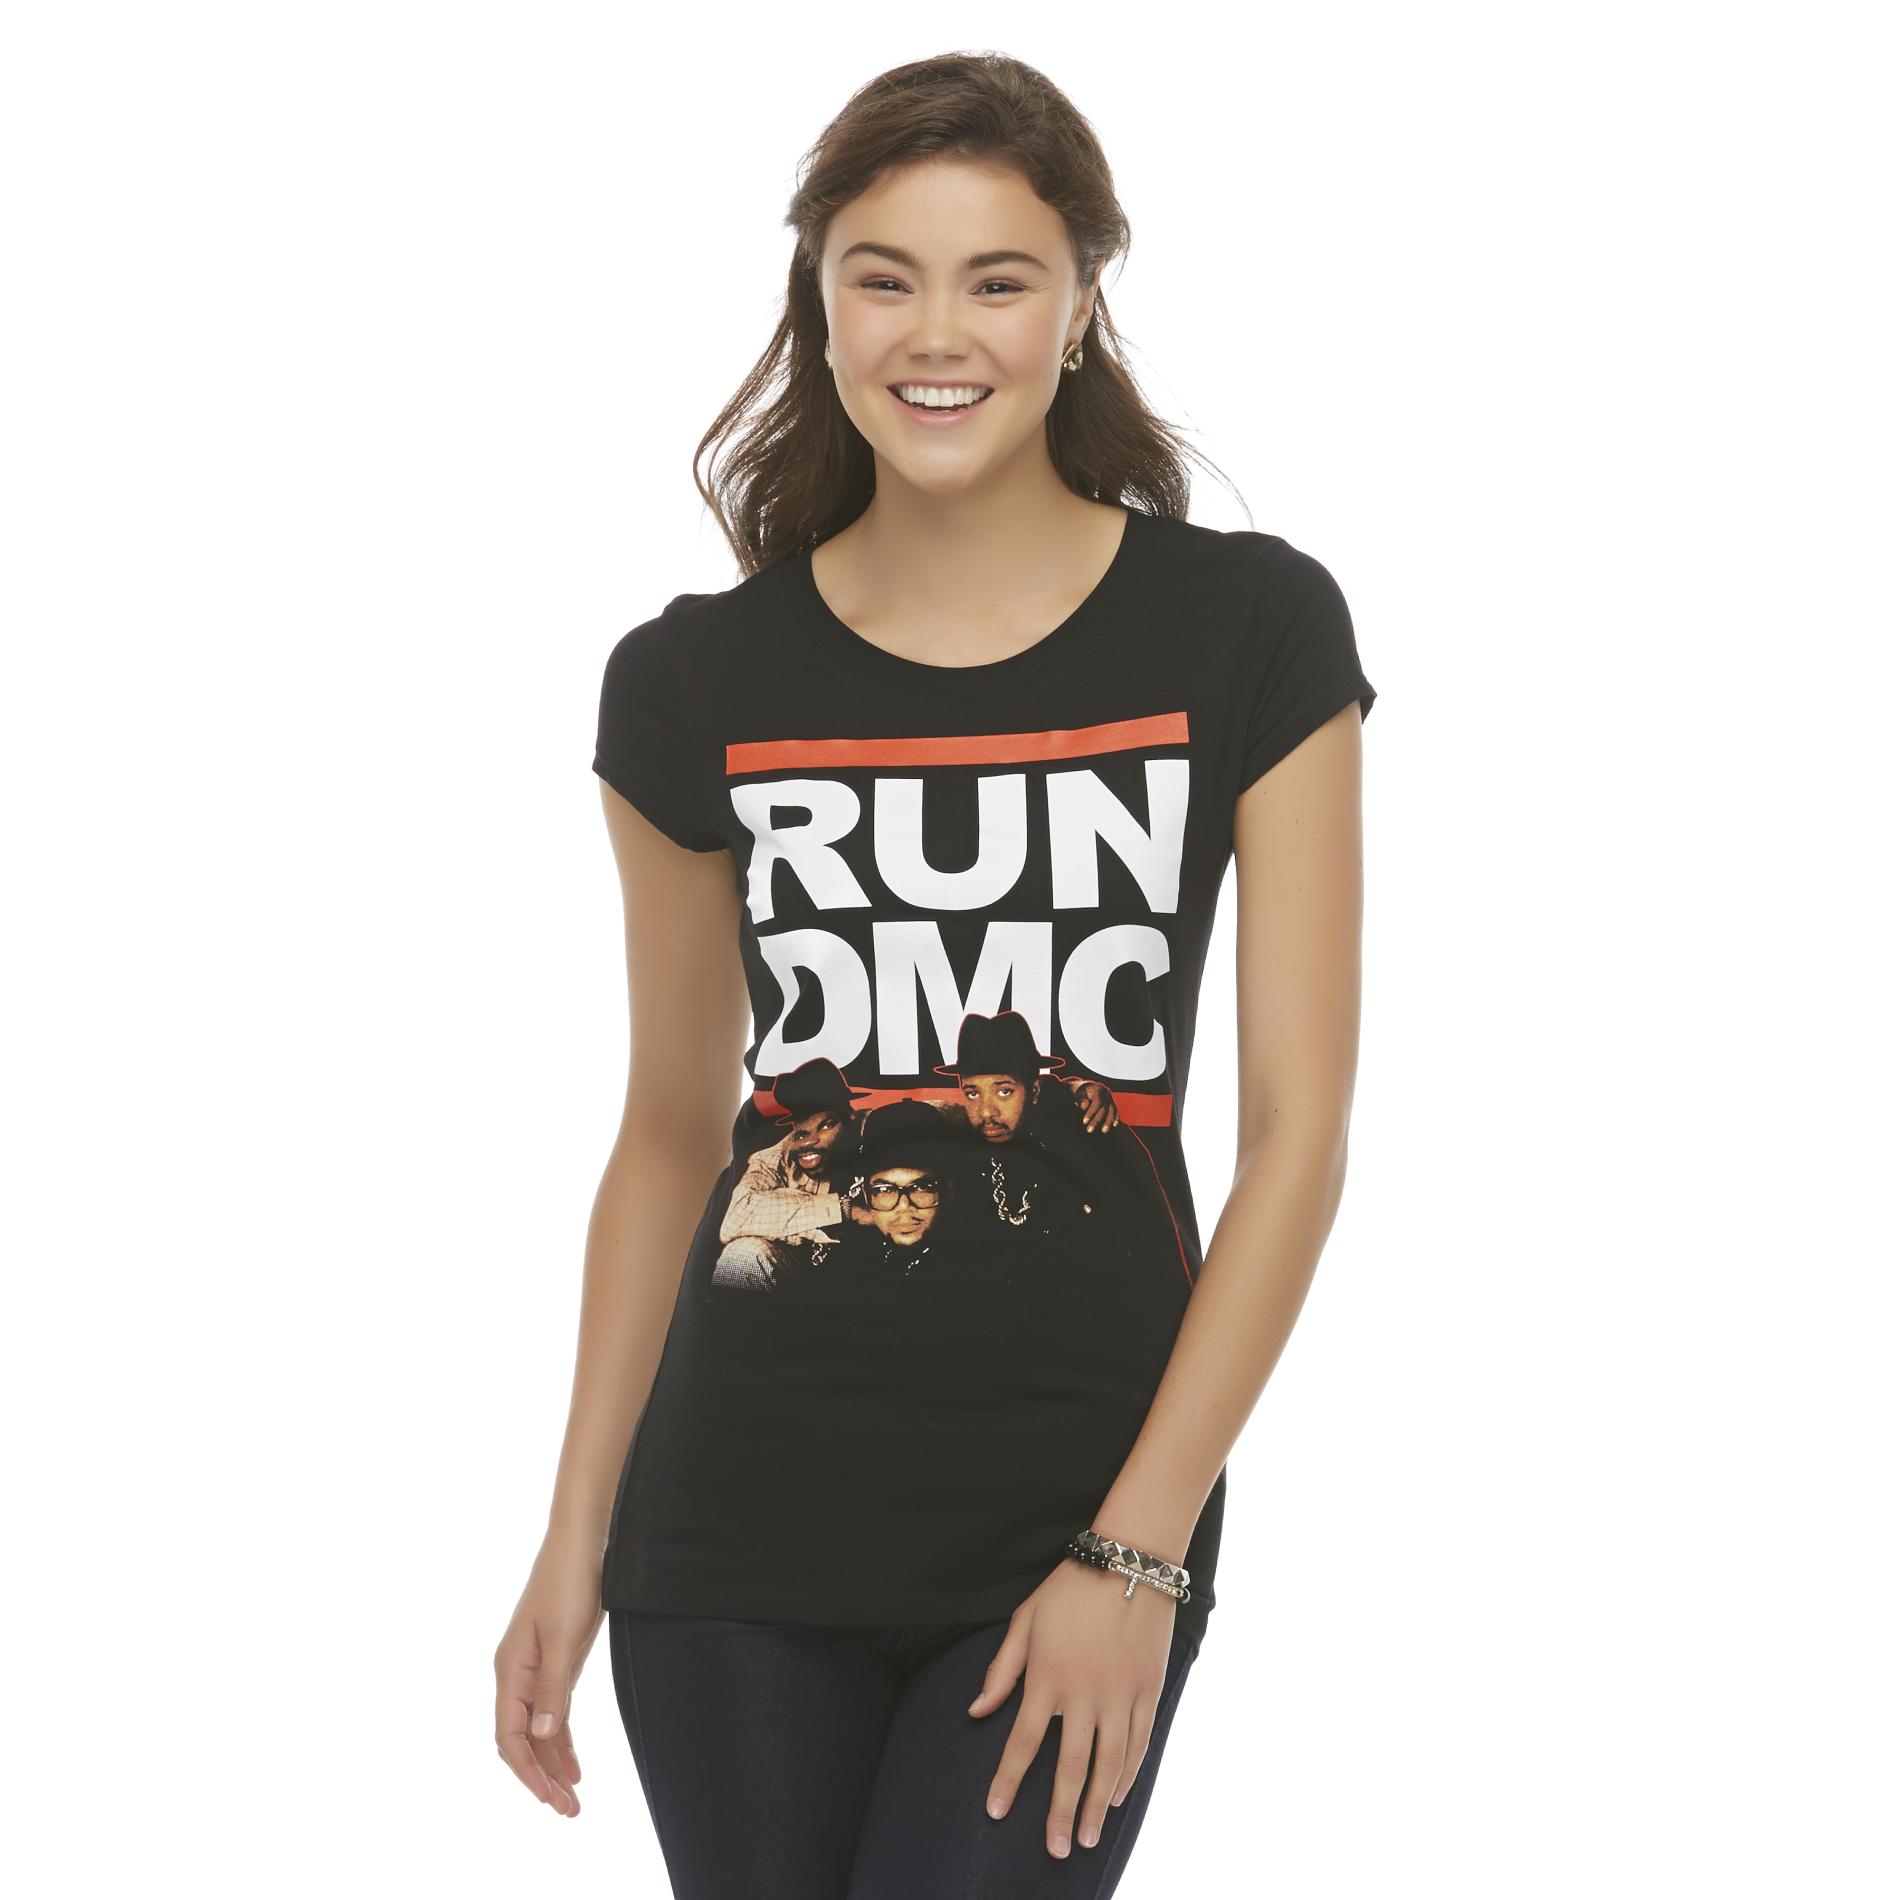 Run DMC Junior's Graphic T-Shirt